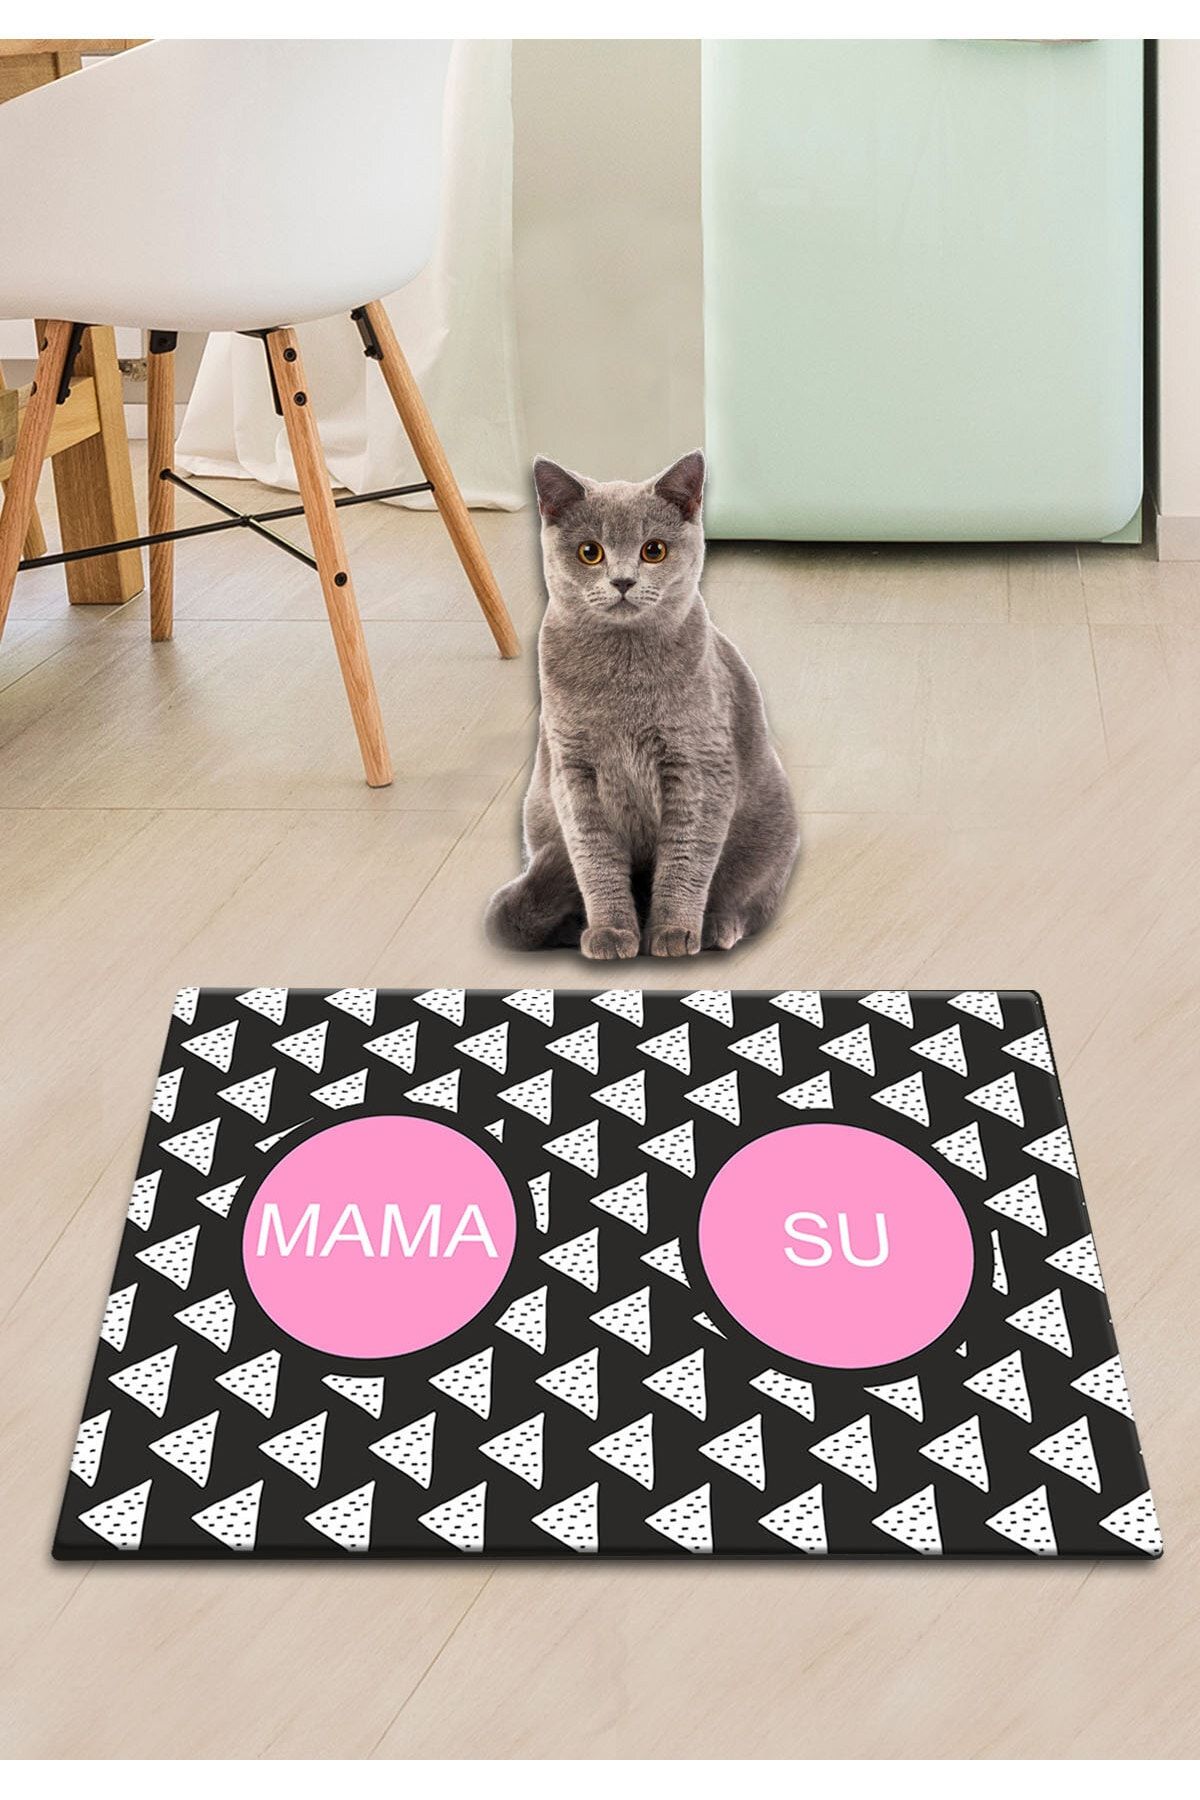 Chilai Home Pvc Cracker Köpek Kedi Mama Paspası